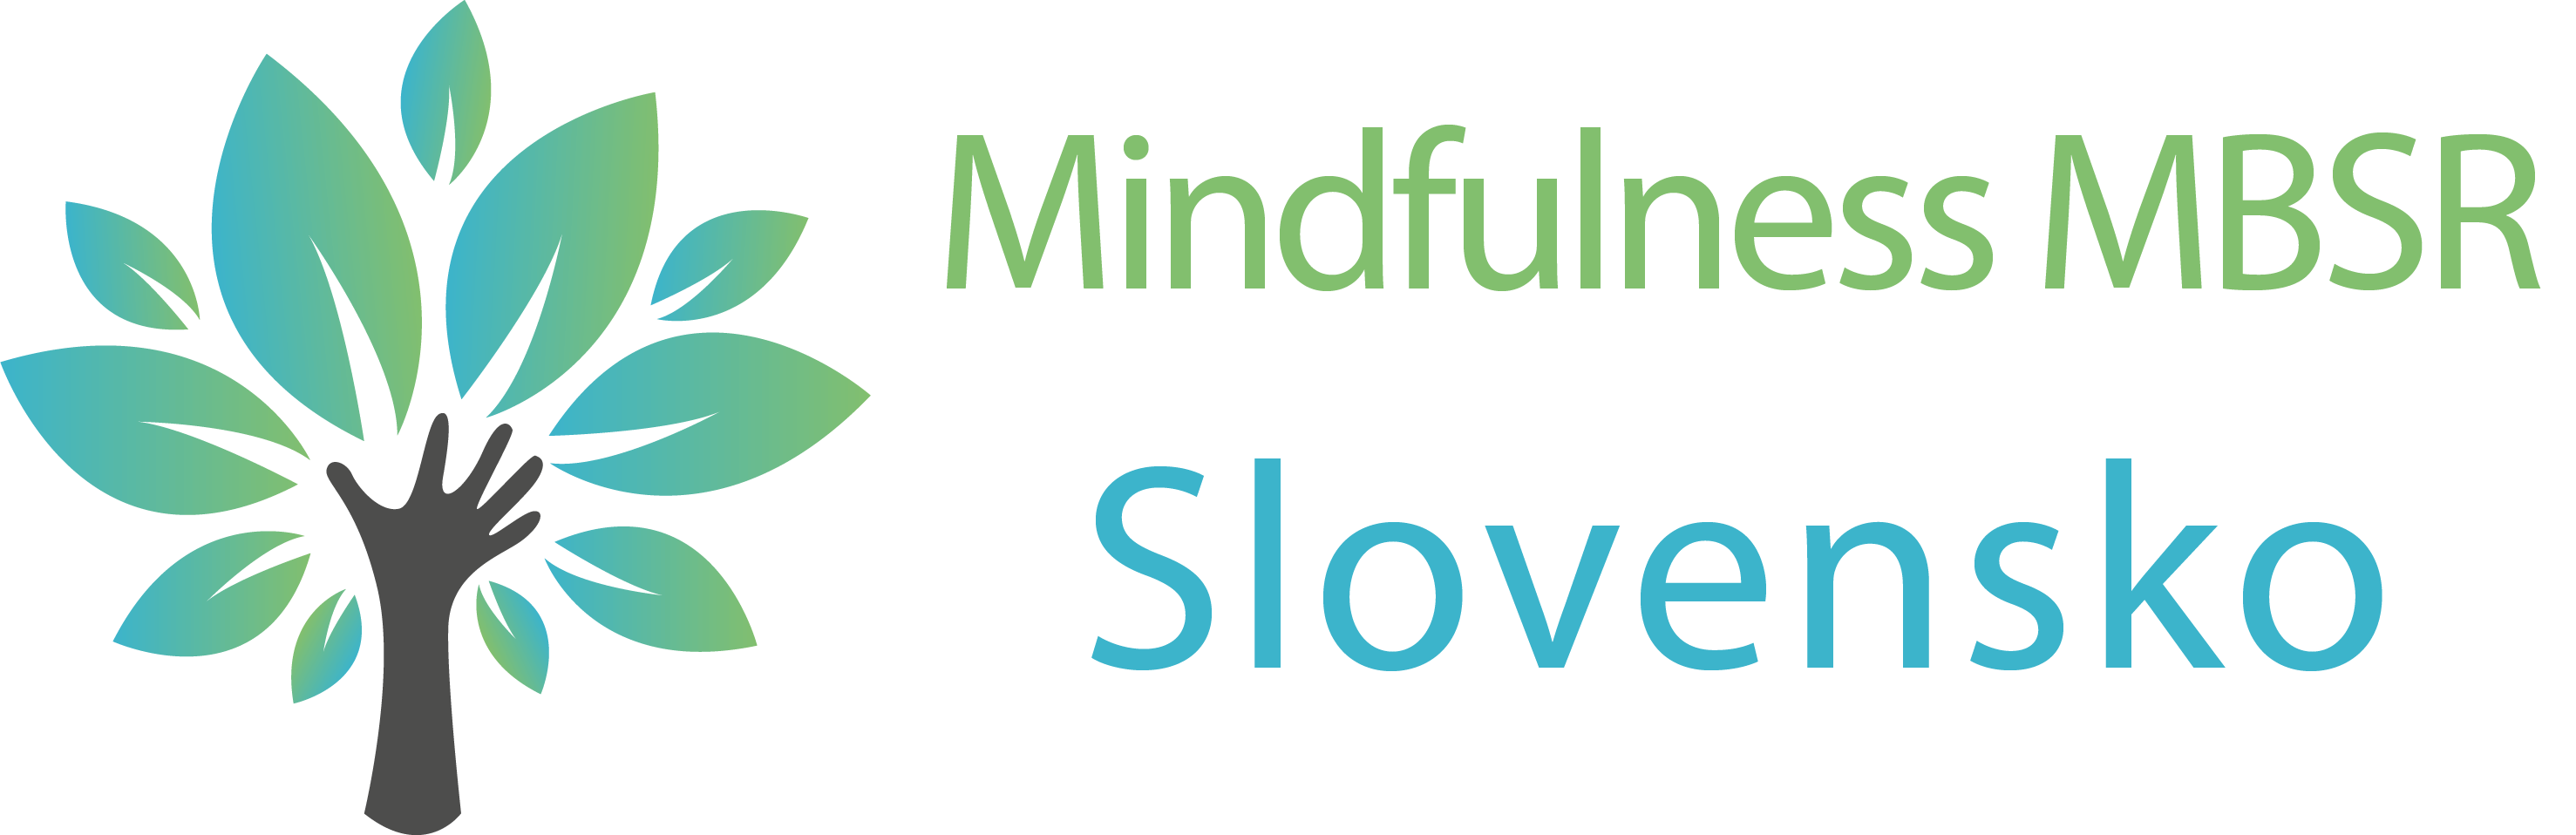 Logo Mindfulness MBSR